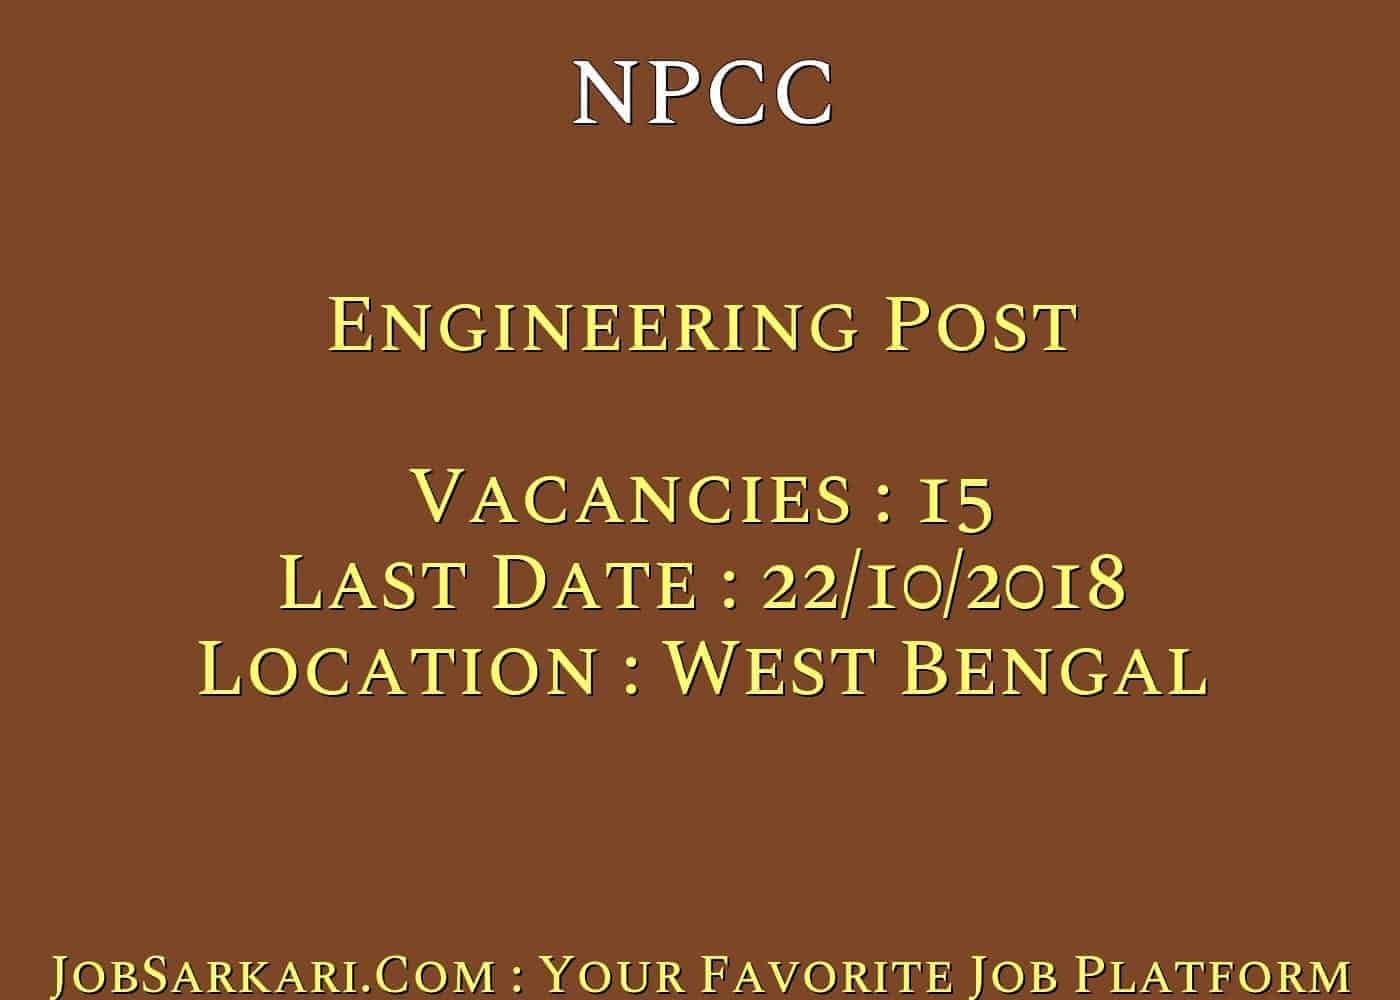 NPCC Recruitment 2018 For Engineering Post